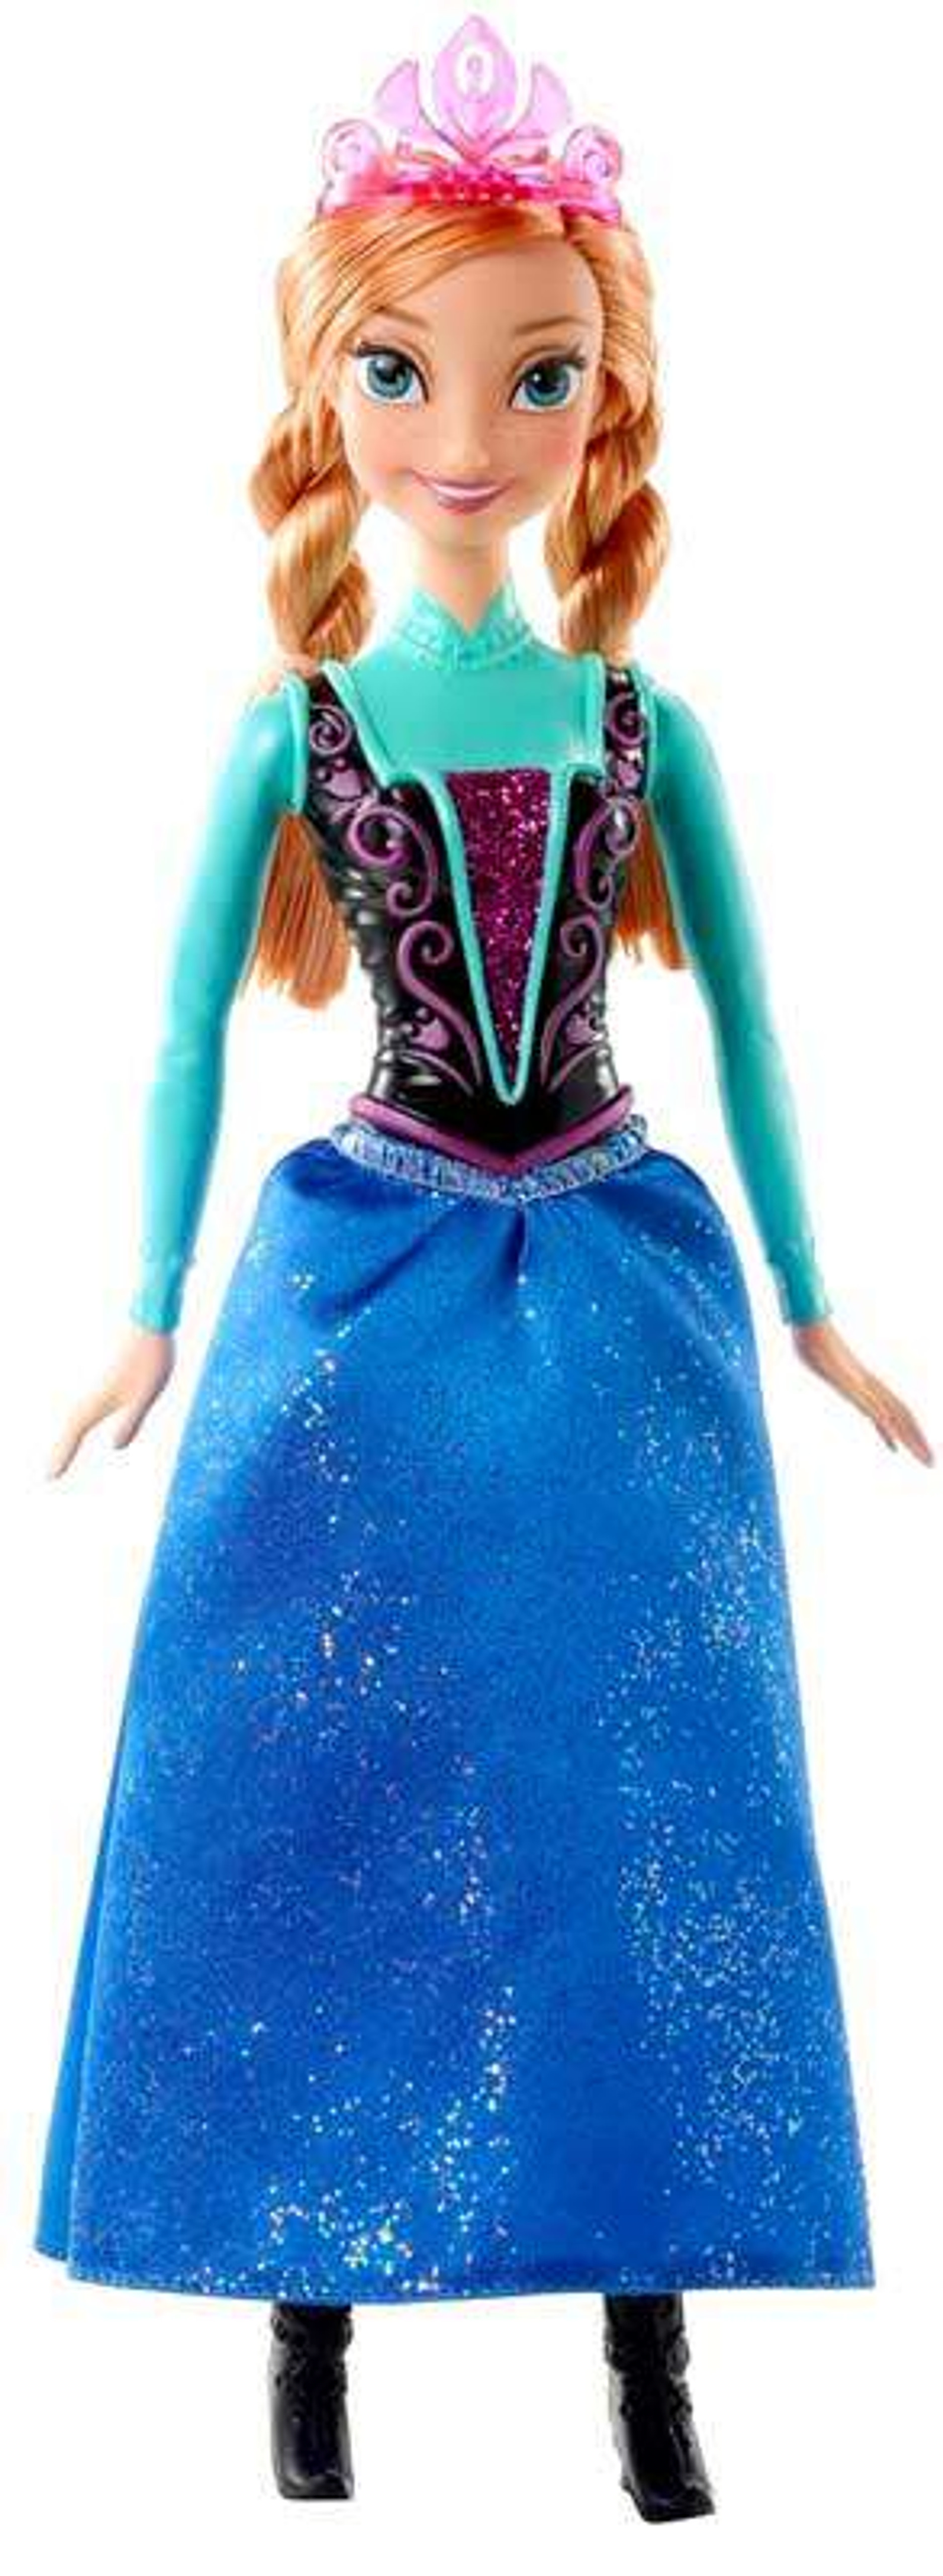 Disney Frozen Sparkle Princess Anna Of Arendelle 11 Doll Version 2 Mattel Toys Toywiz